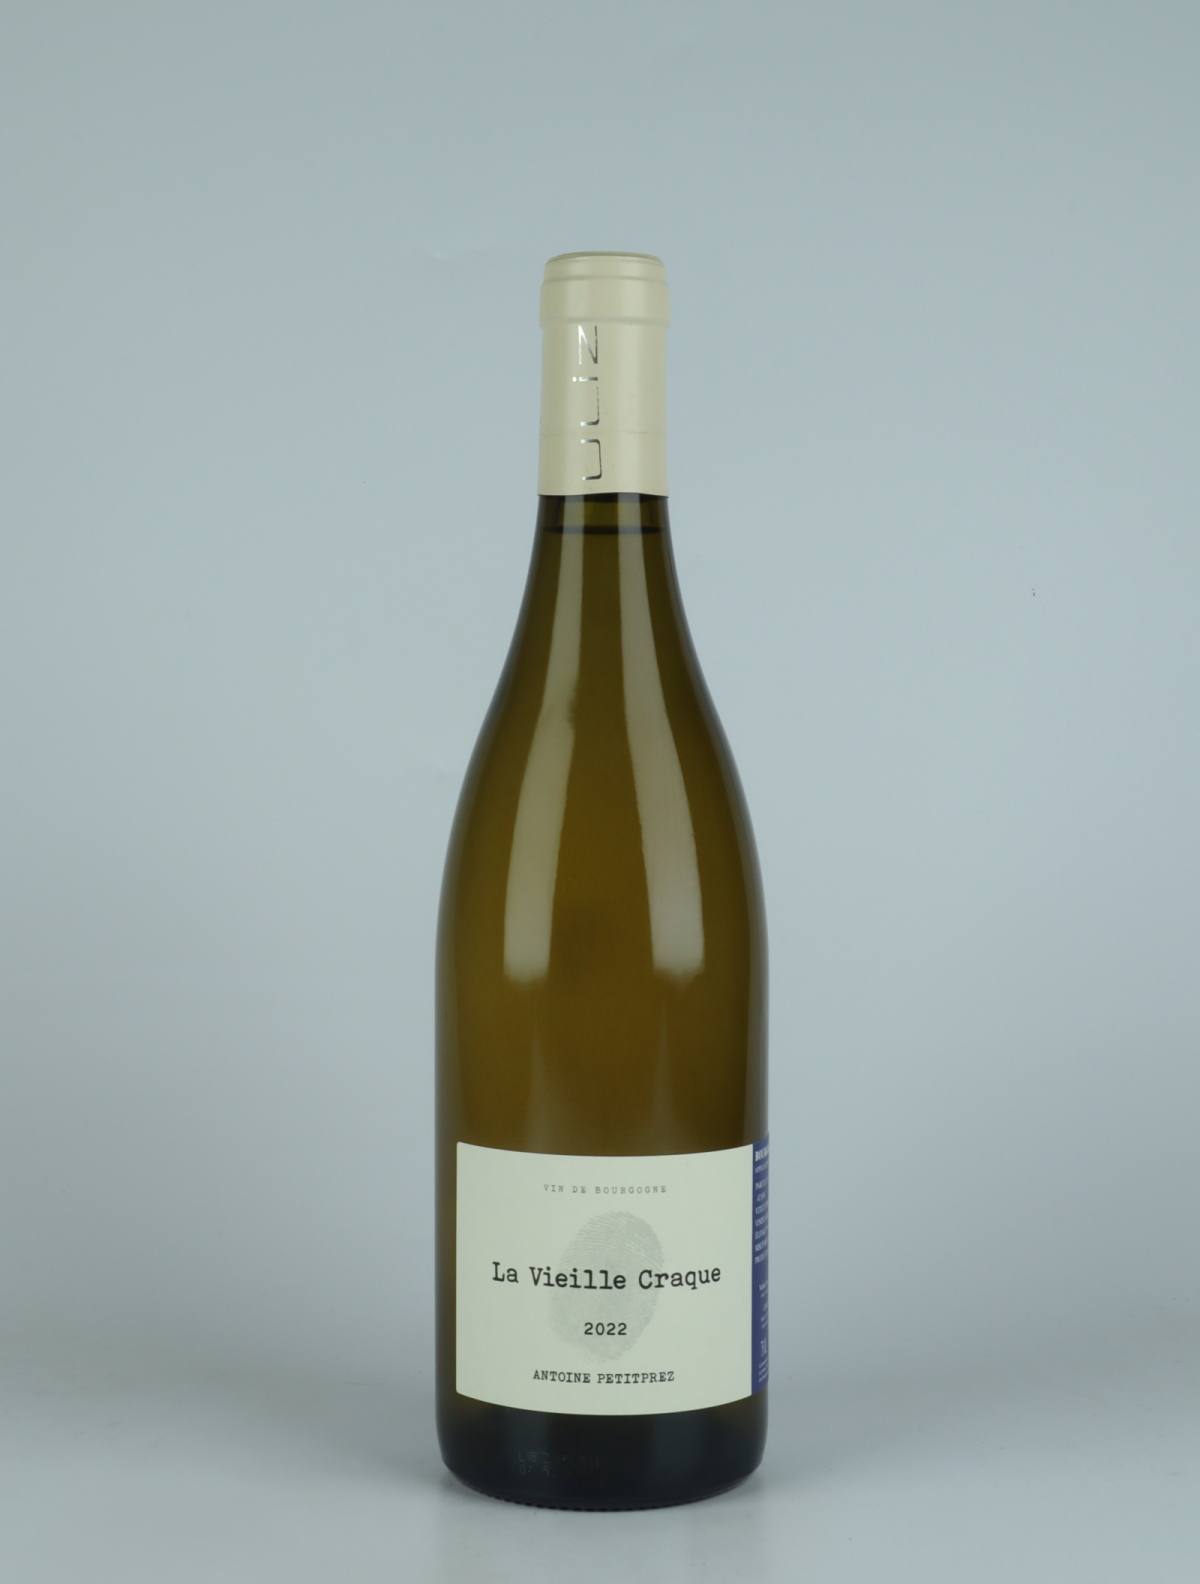 En flaske 2022 Bourgogne Aligoté - Vieille Craque Hvidvin fra Antoine Petitprez, Bourgogne i Frankrig